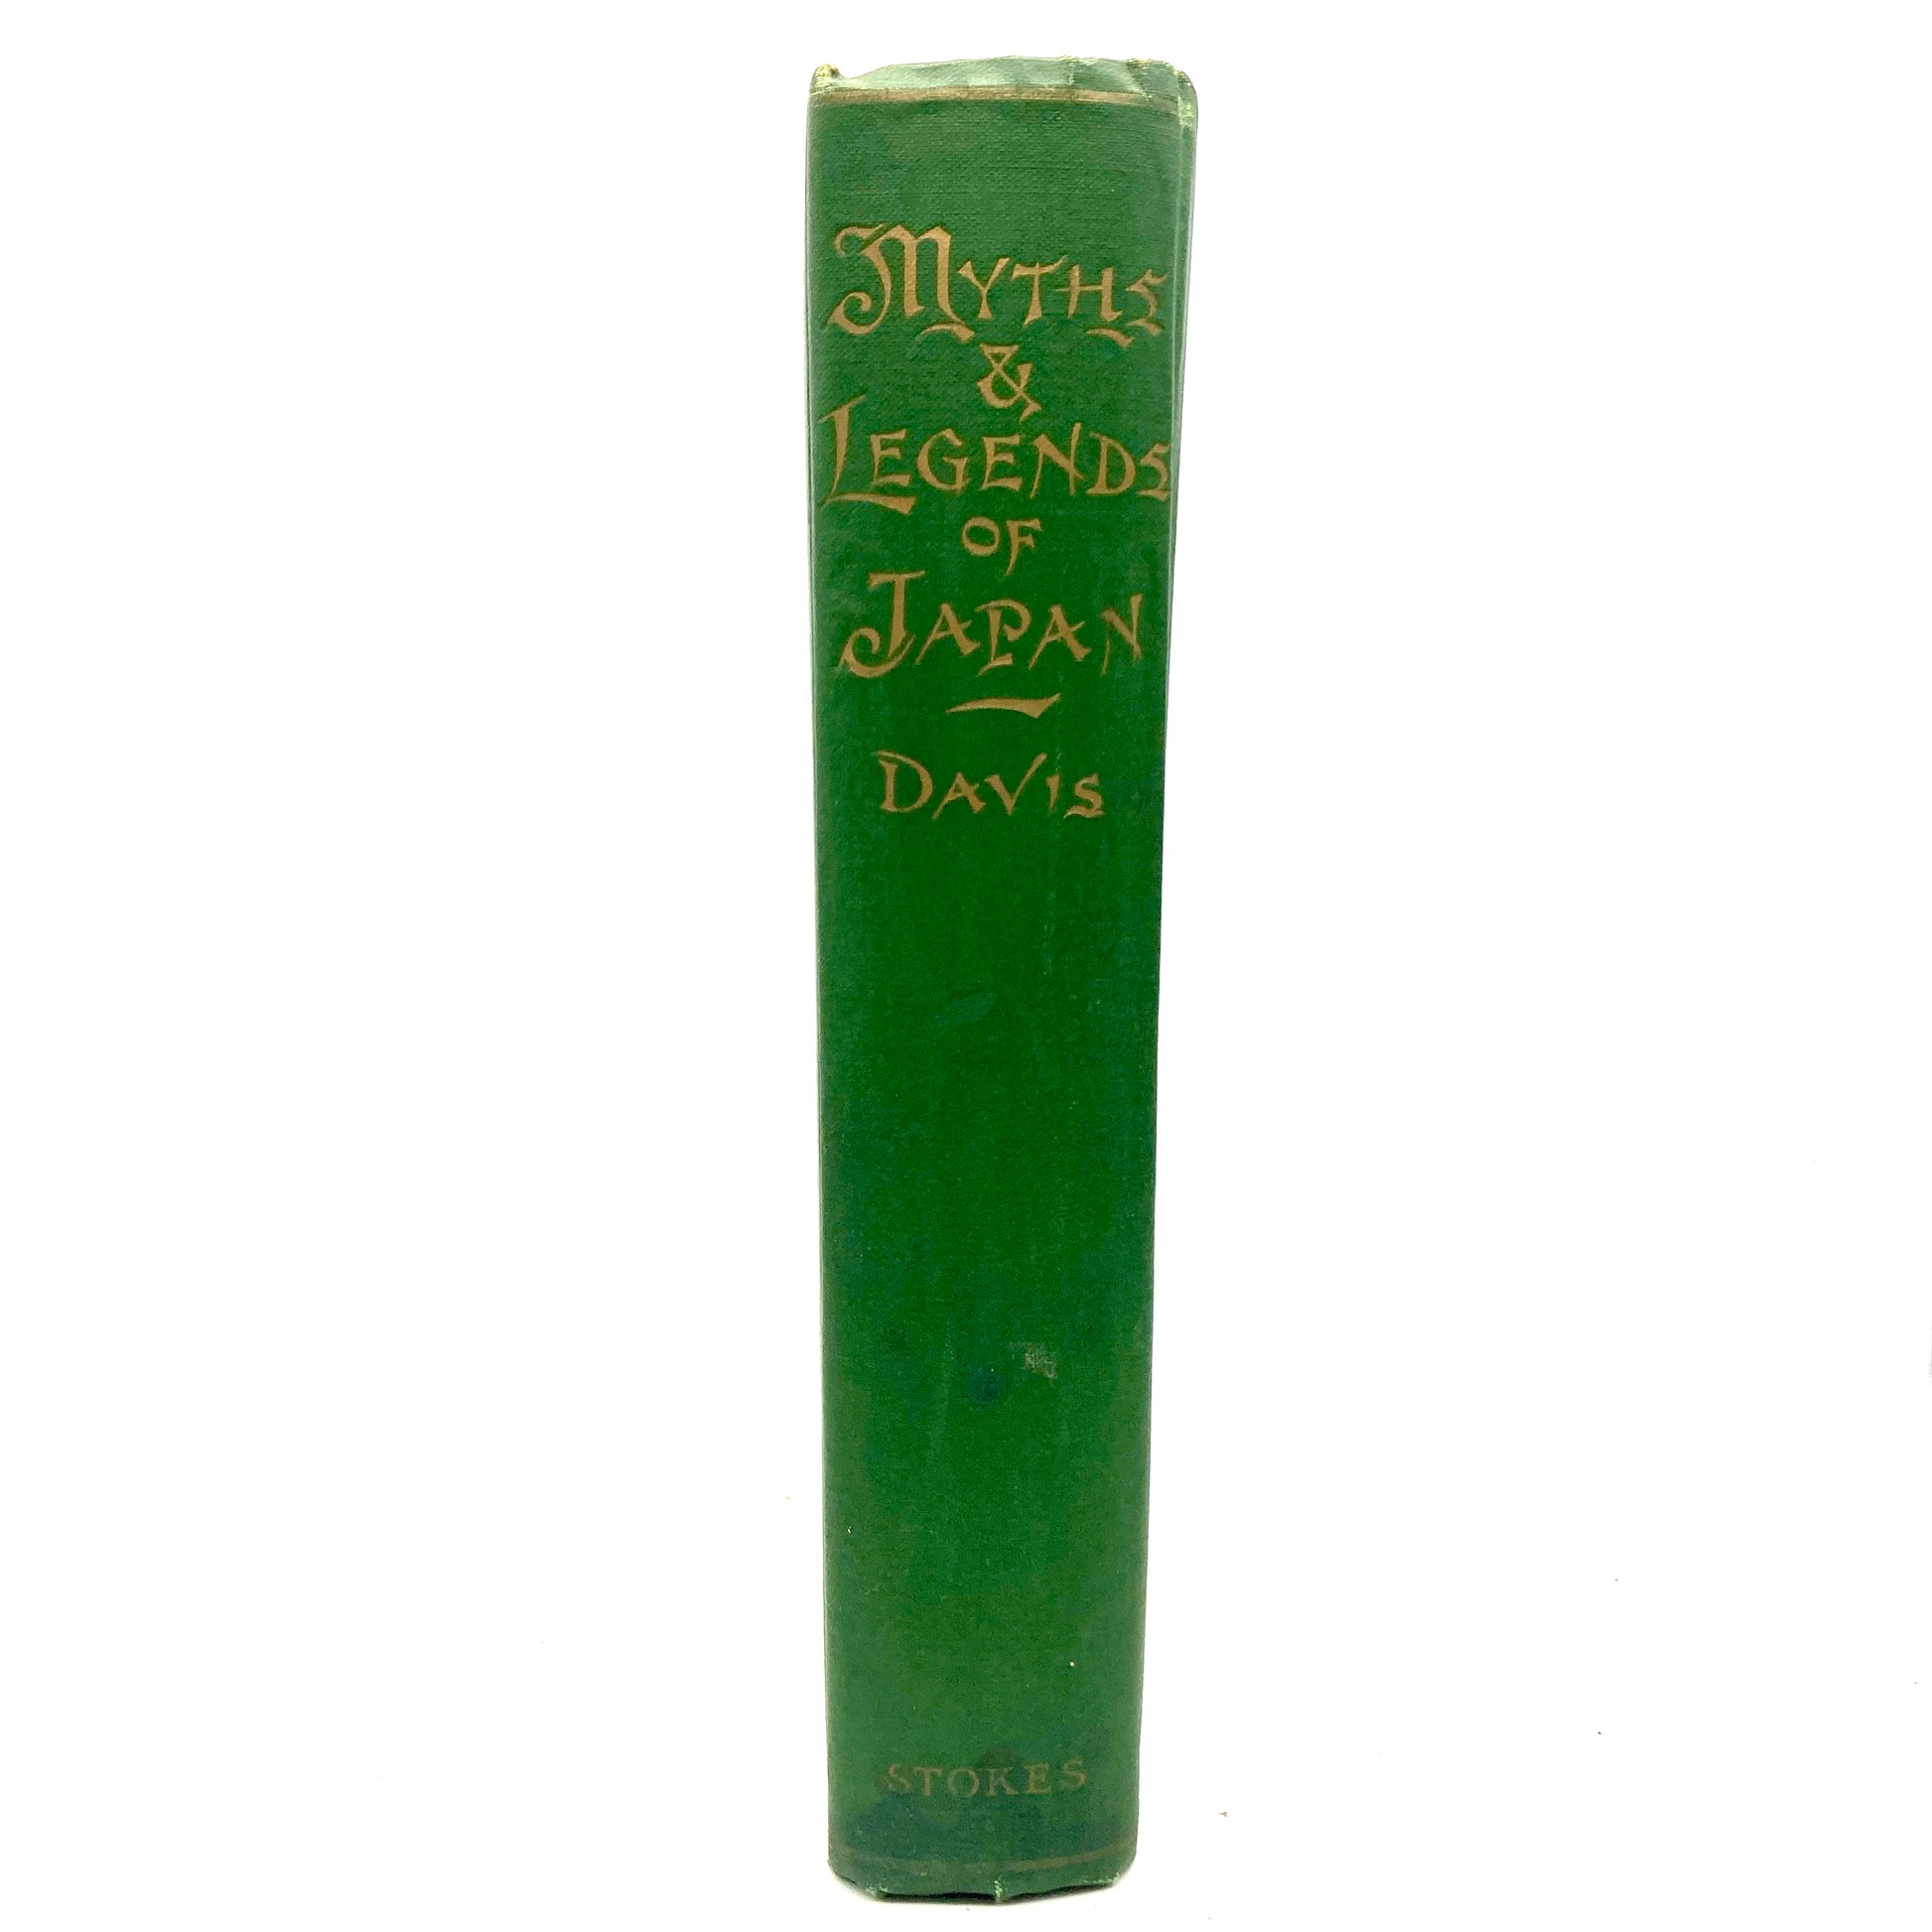 DAVIS, F. Hadland "Myths & Legends of Japan" [Frederick A. Stokes, c1928] - Buzz Bookstore